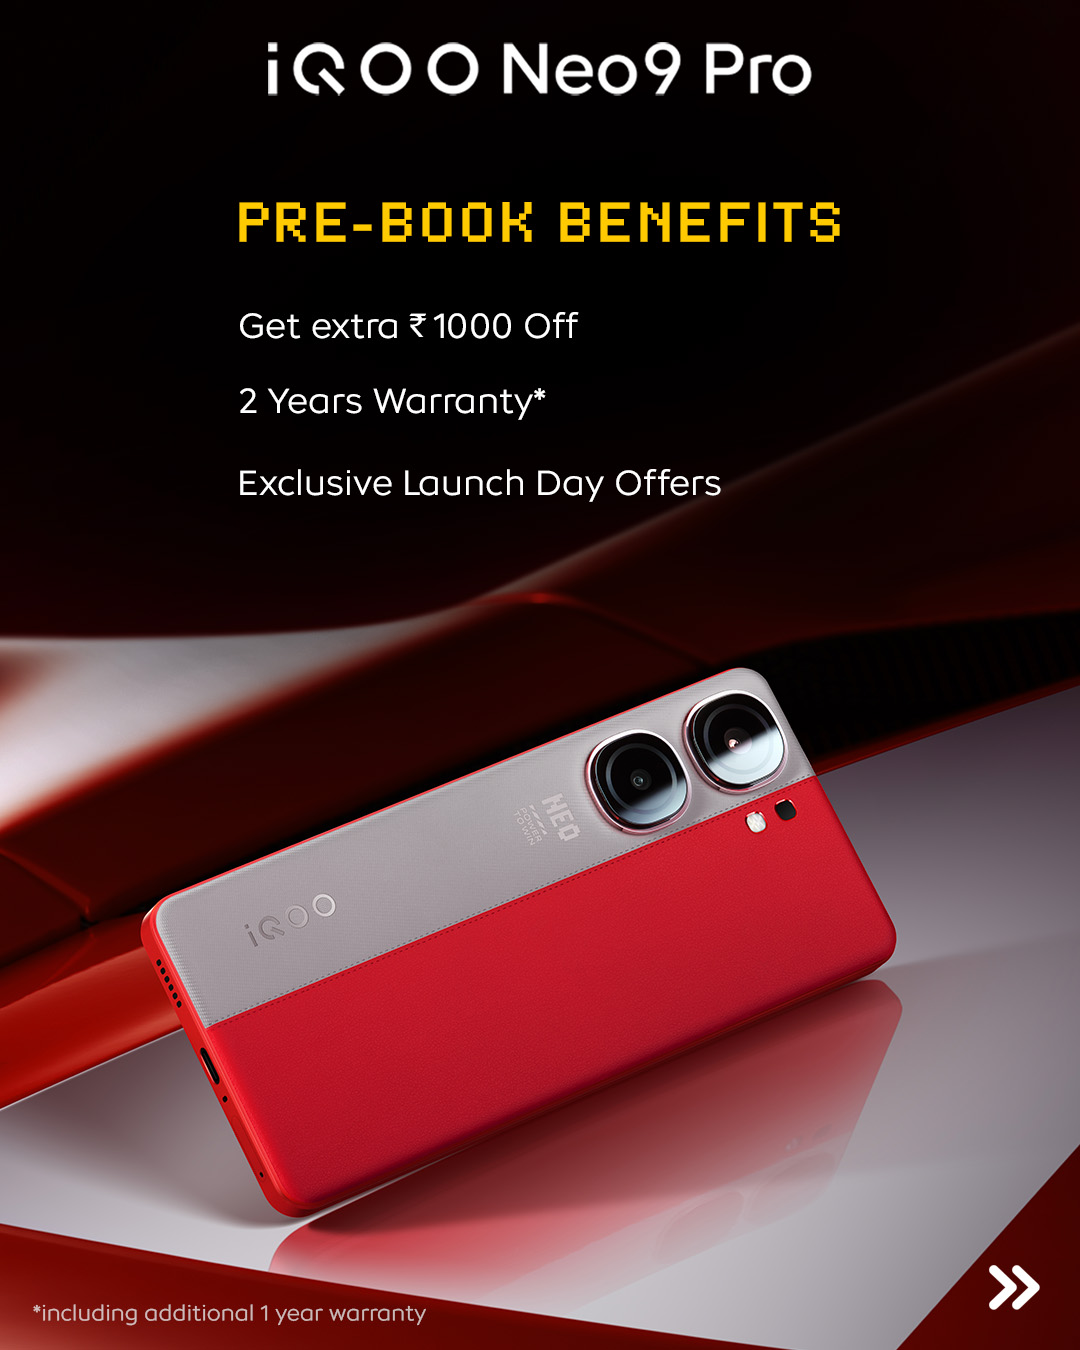 iQOO Neo 9 Pro Pre-Bookings Begin February 8